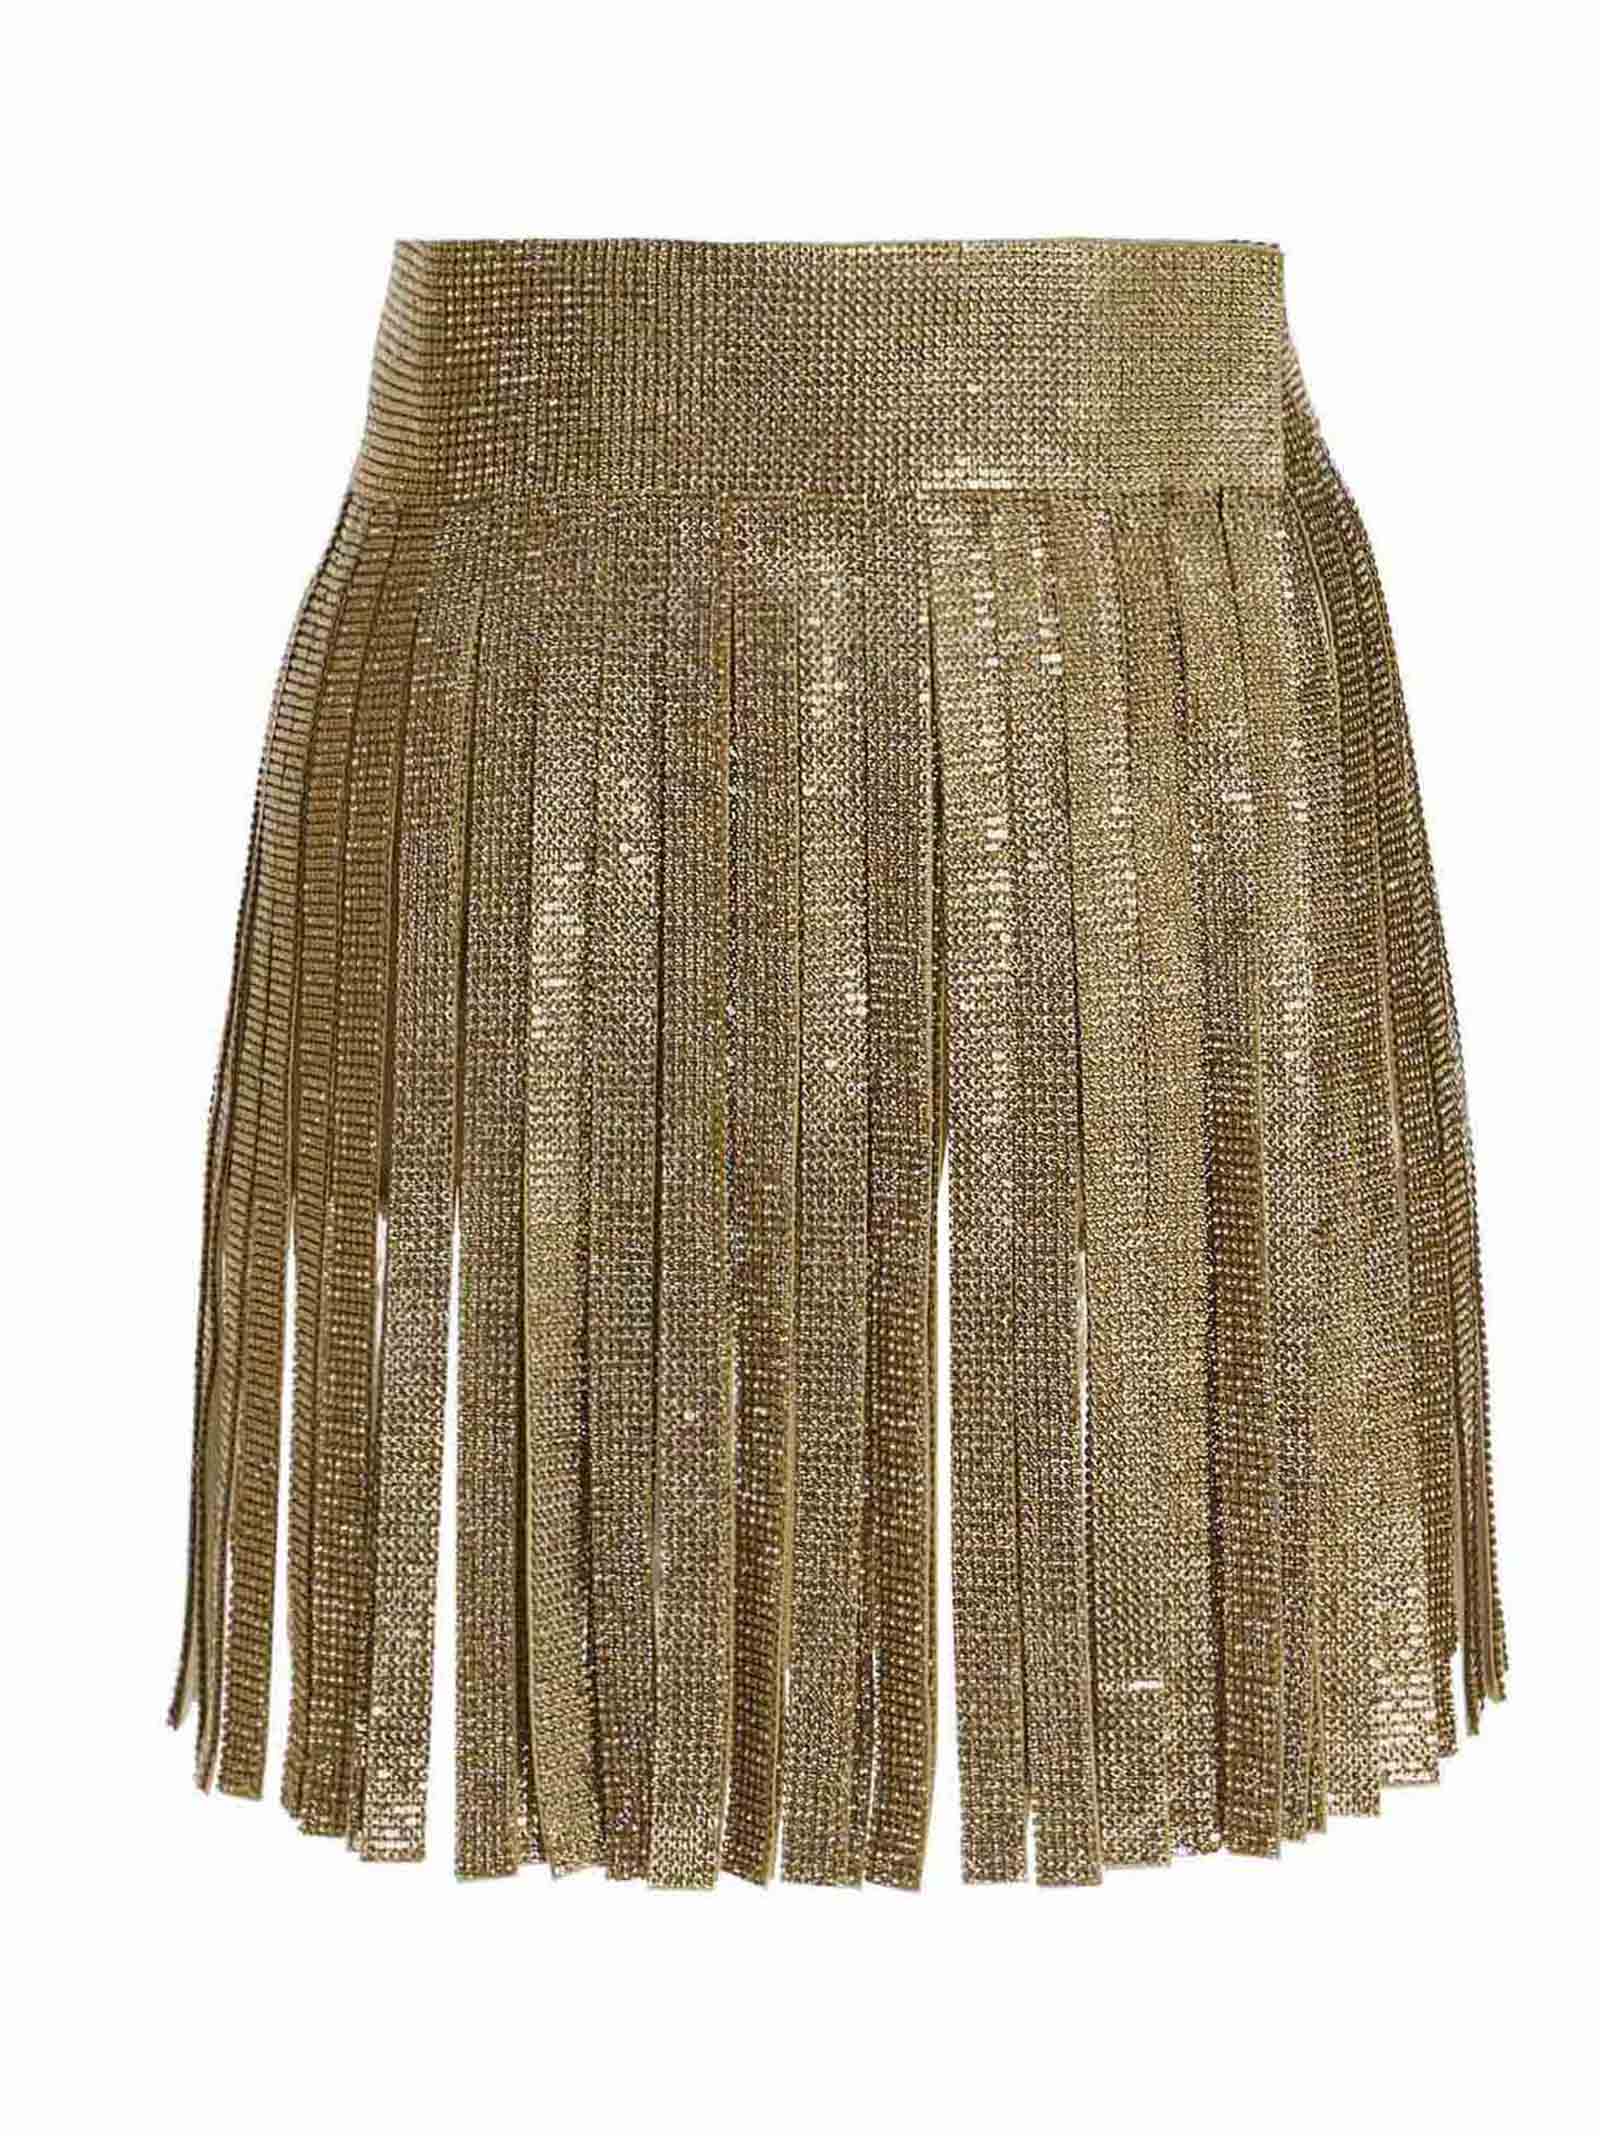 Dolce & Gabbana Crystal Mesh Skirt